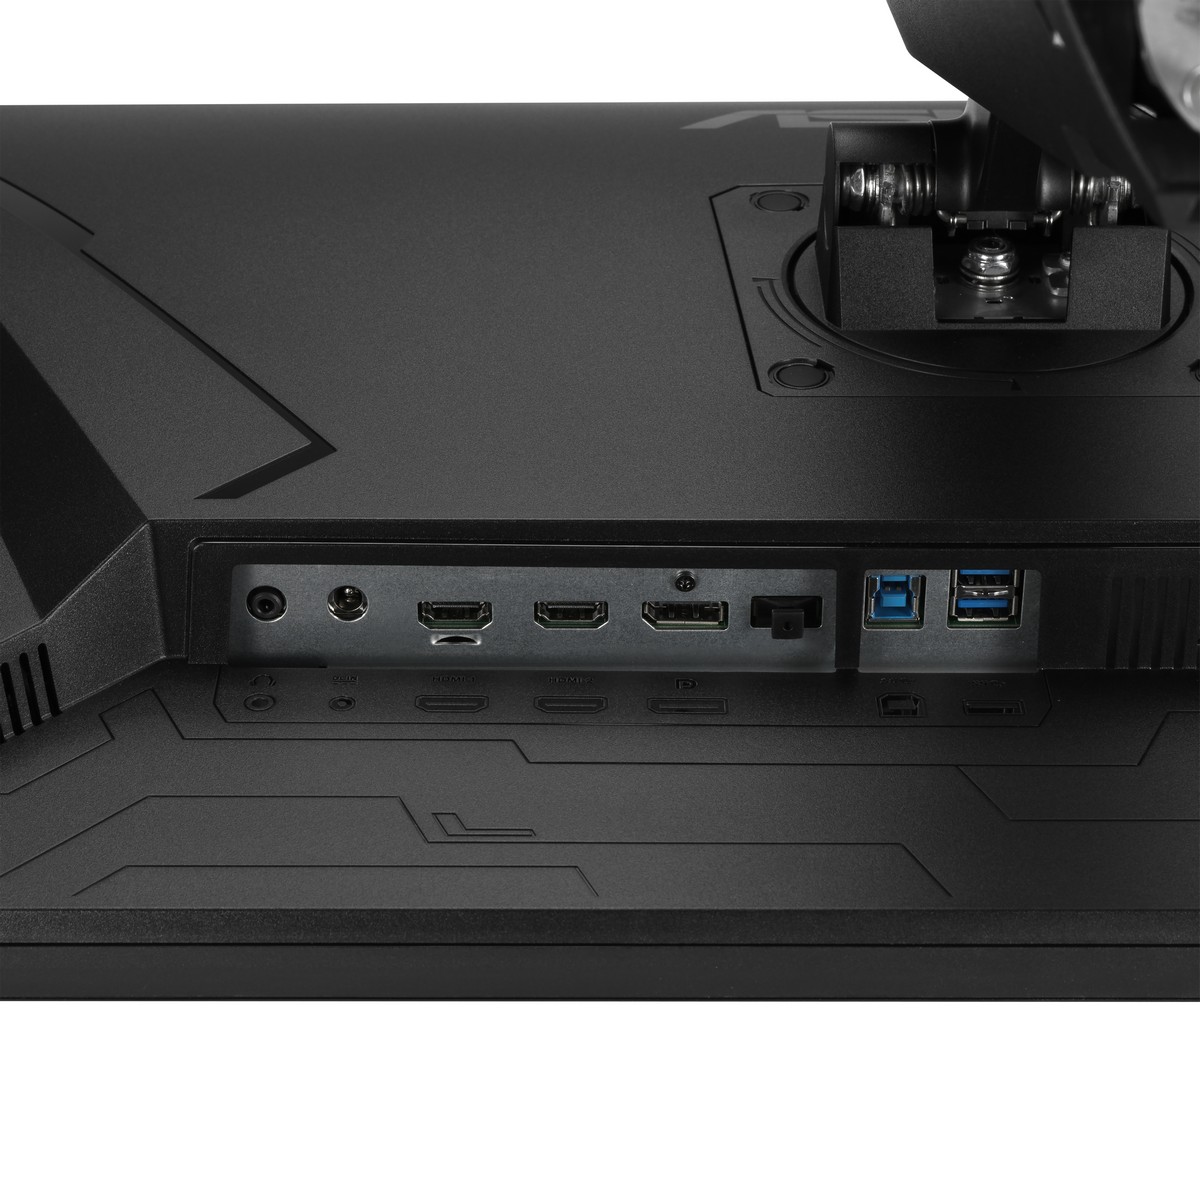 Asus - ASUS 32" TUF Gaming VG32AQL1A 2560x1440 IPS 170Hz 1ms FreeSync Widescreen Gaming Monitor